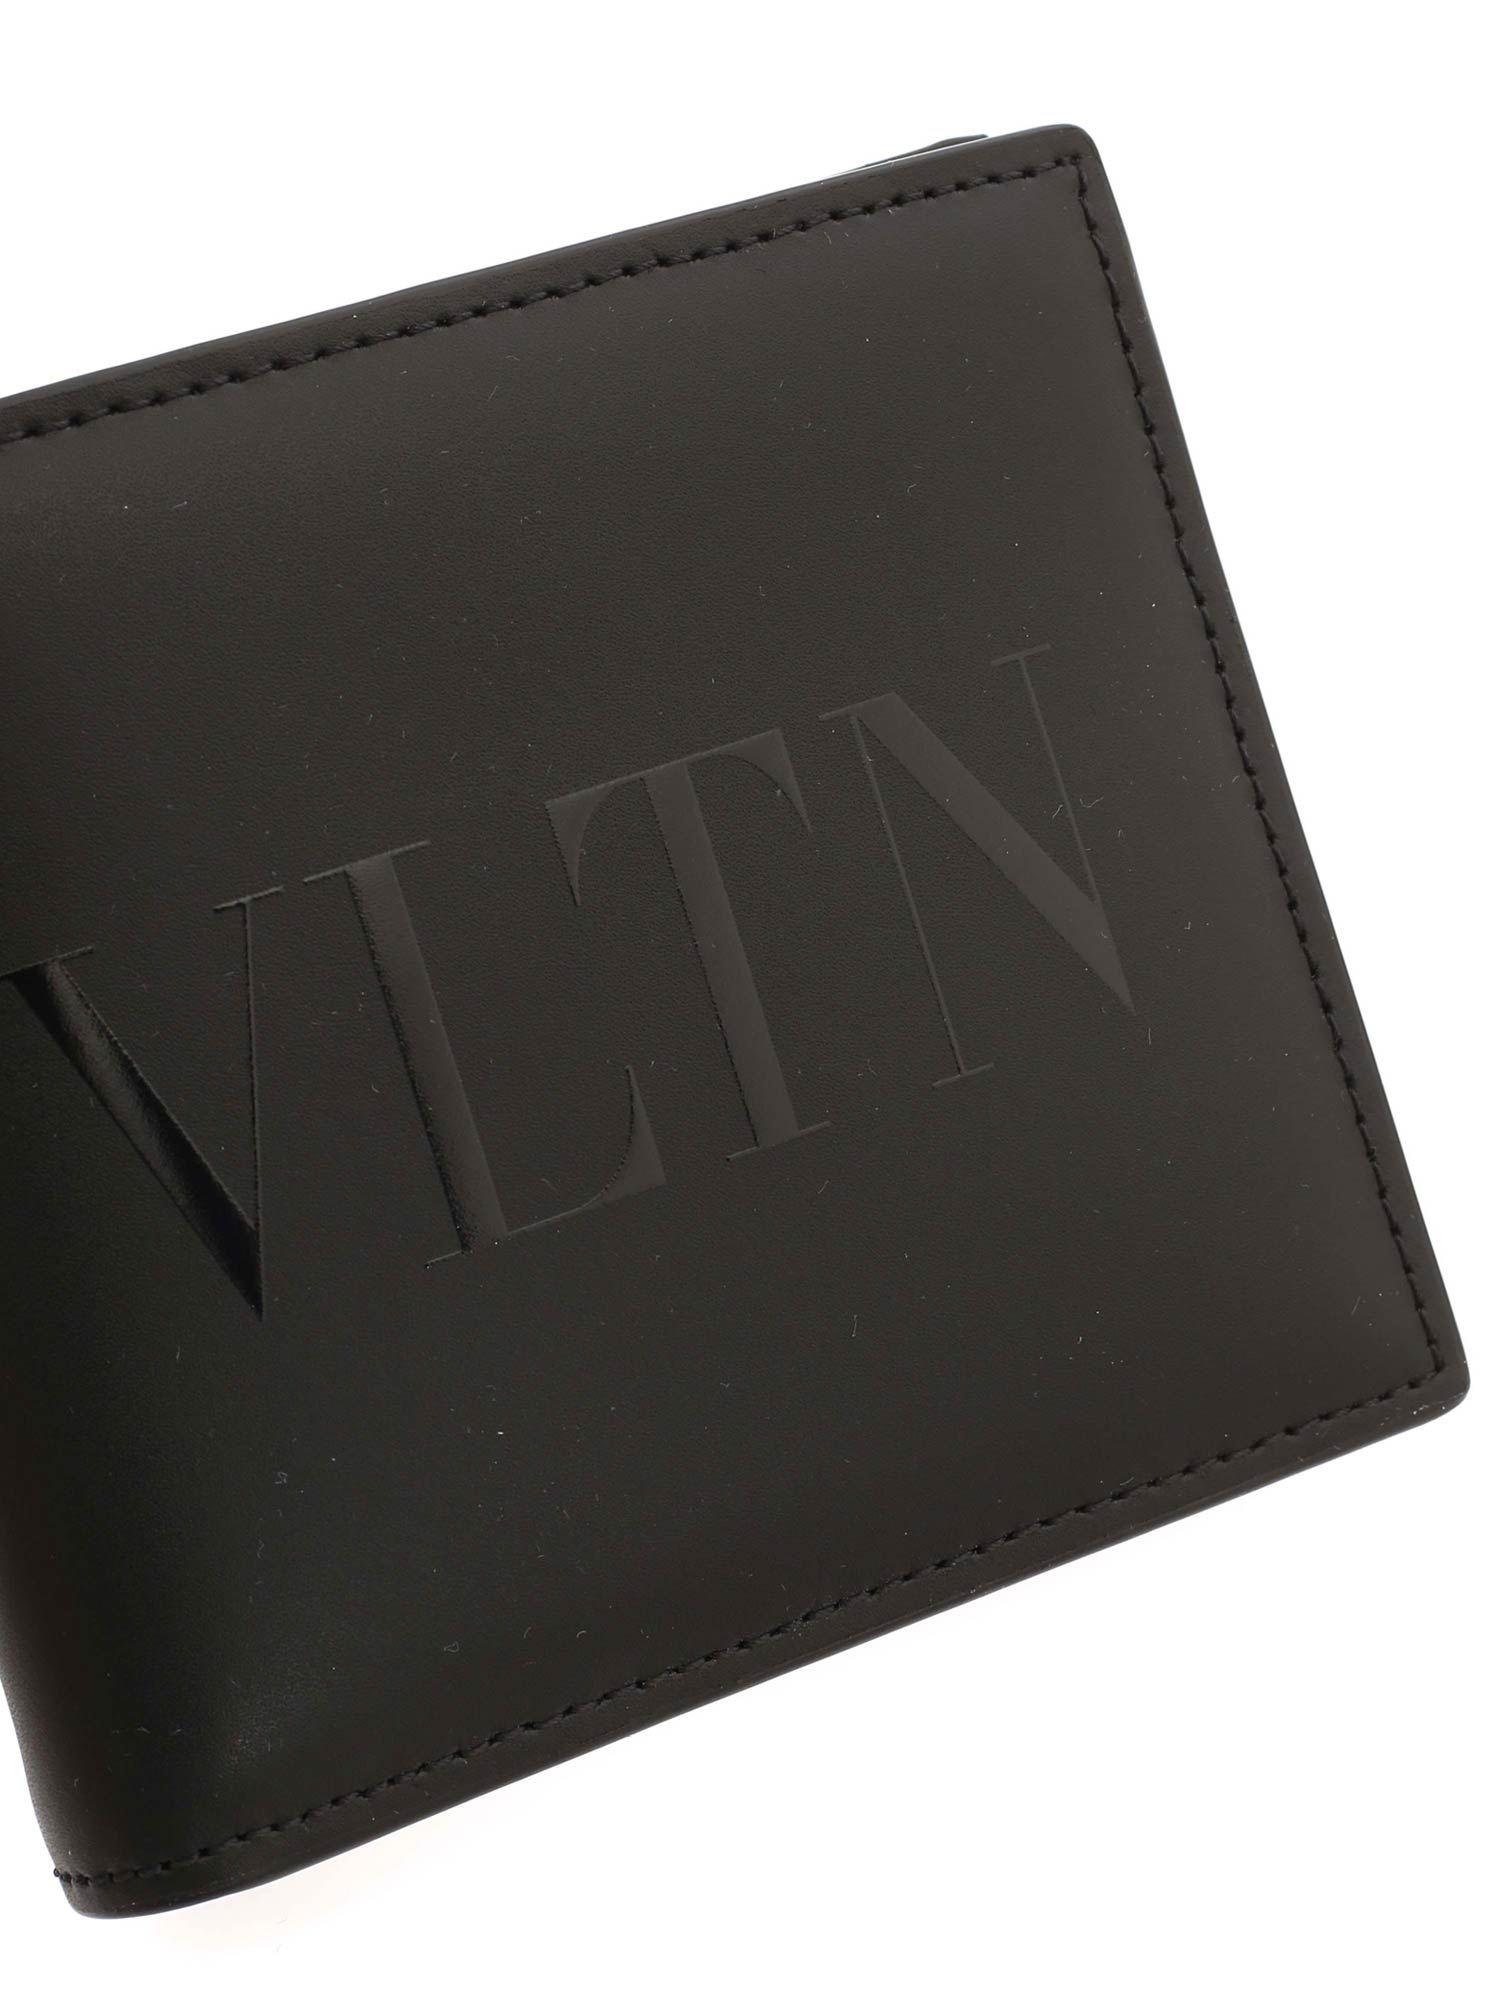 Valentino Garavani Leather Vltn Print Wallet in Black for Men - Lyst